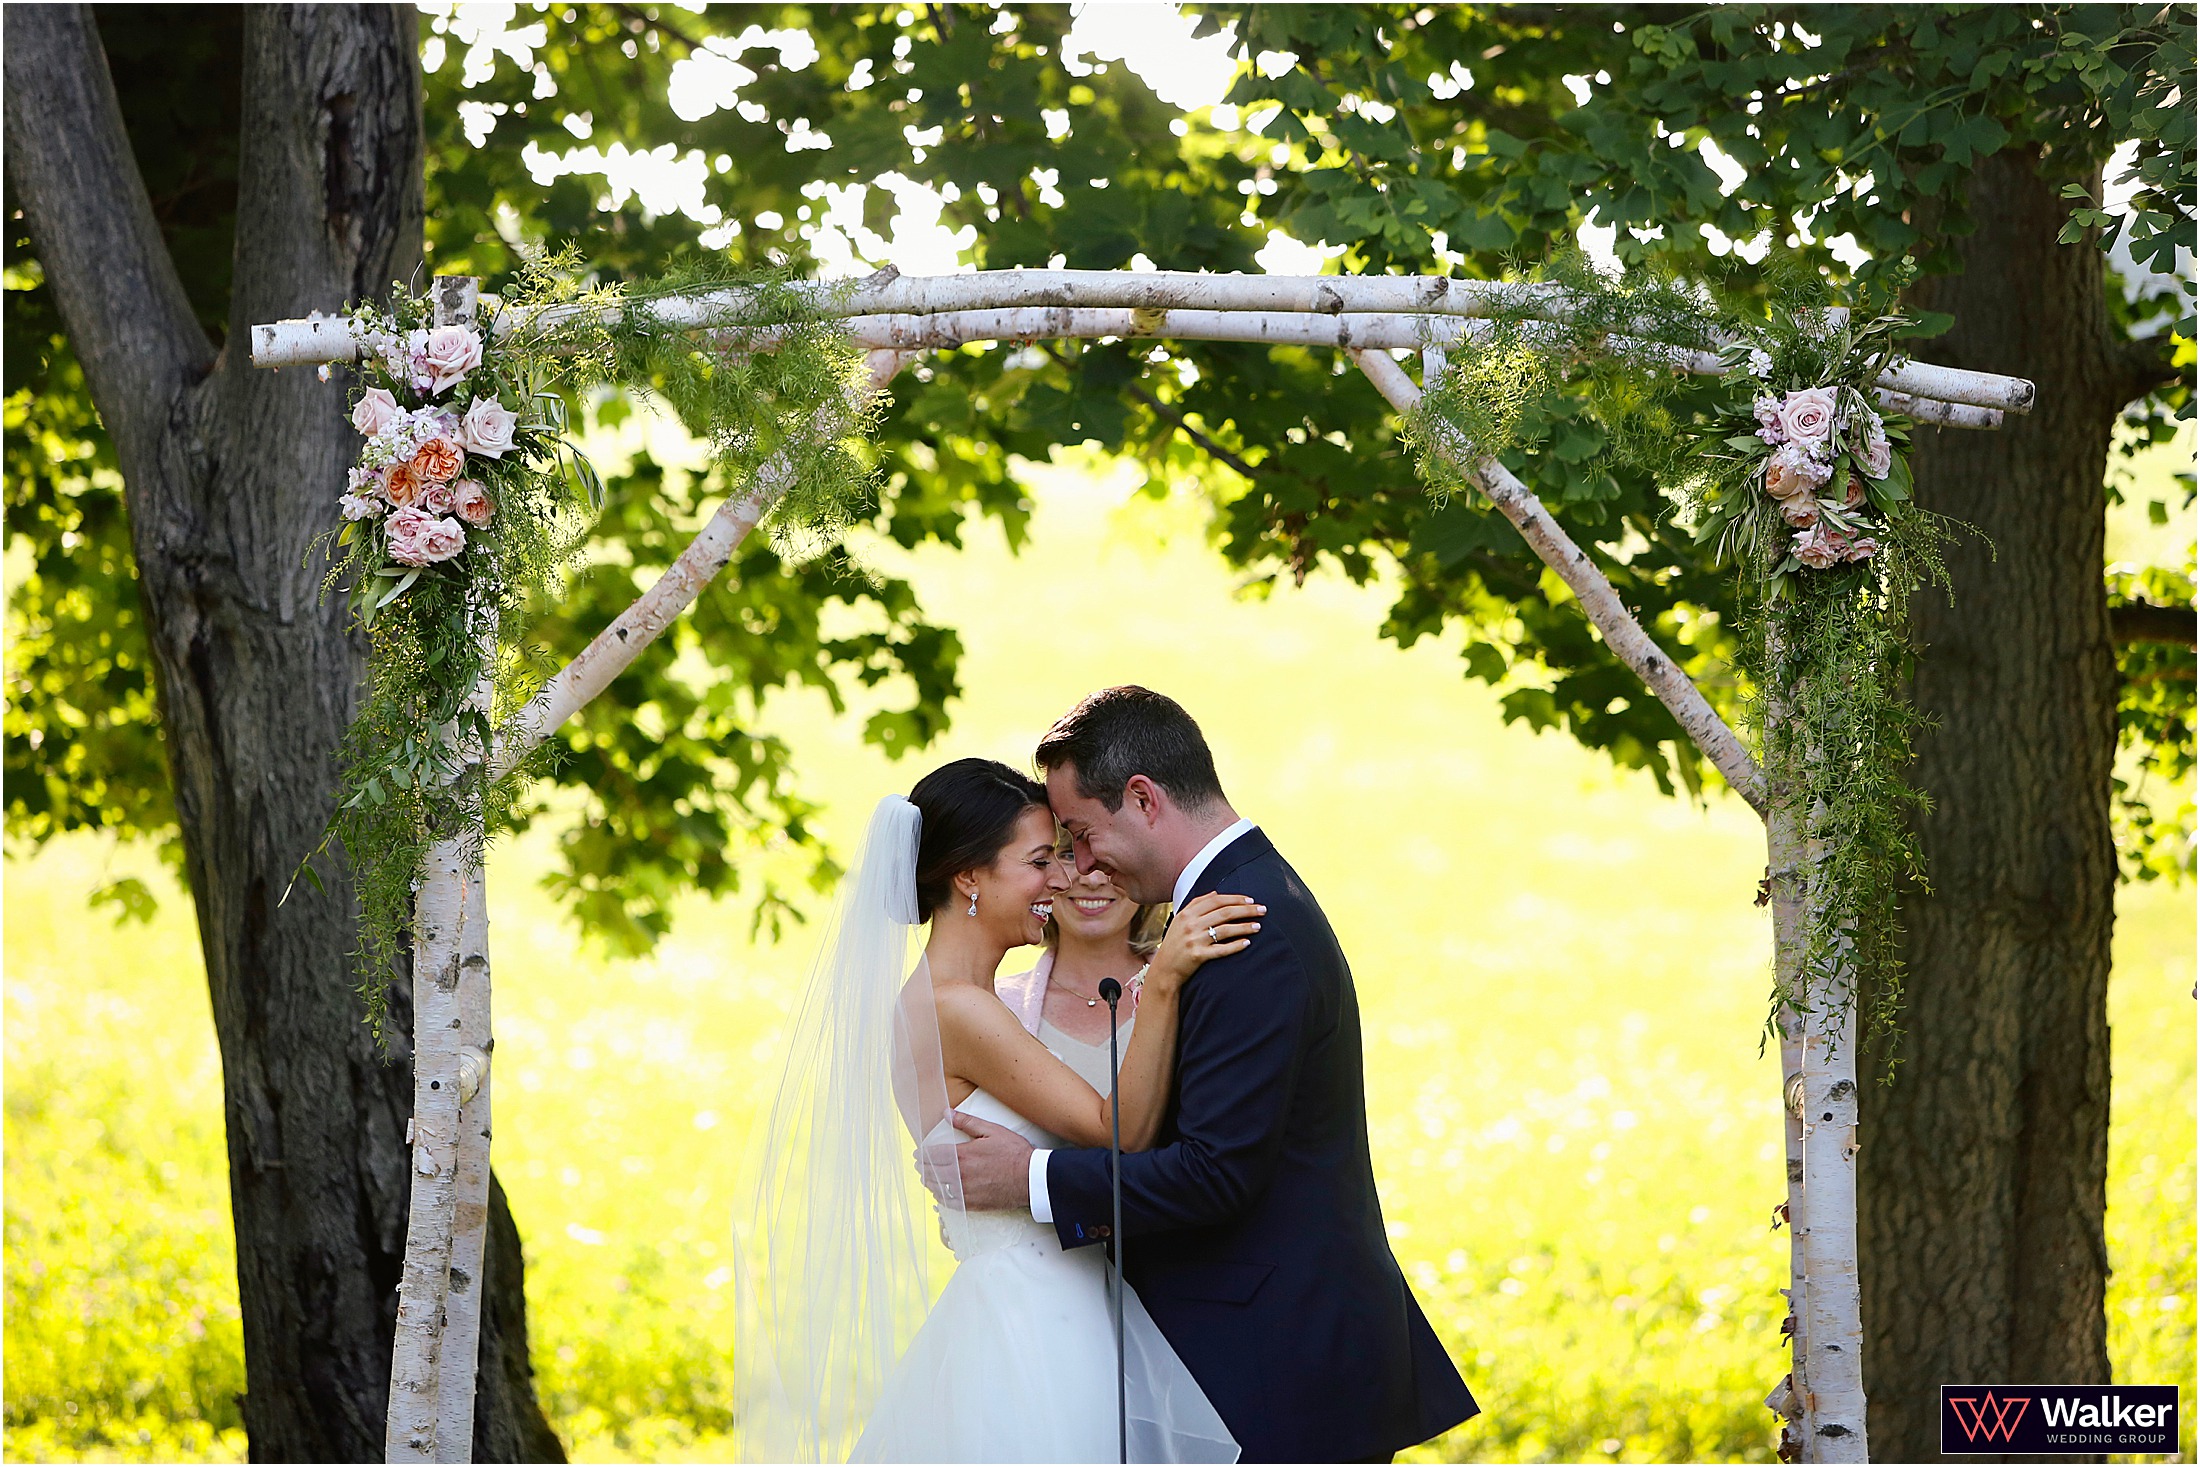 Outdoor Wedding Ceremony Venue in Vermont